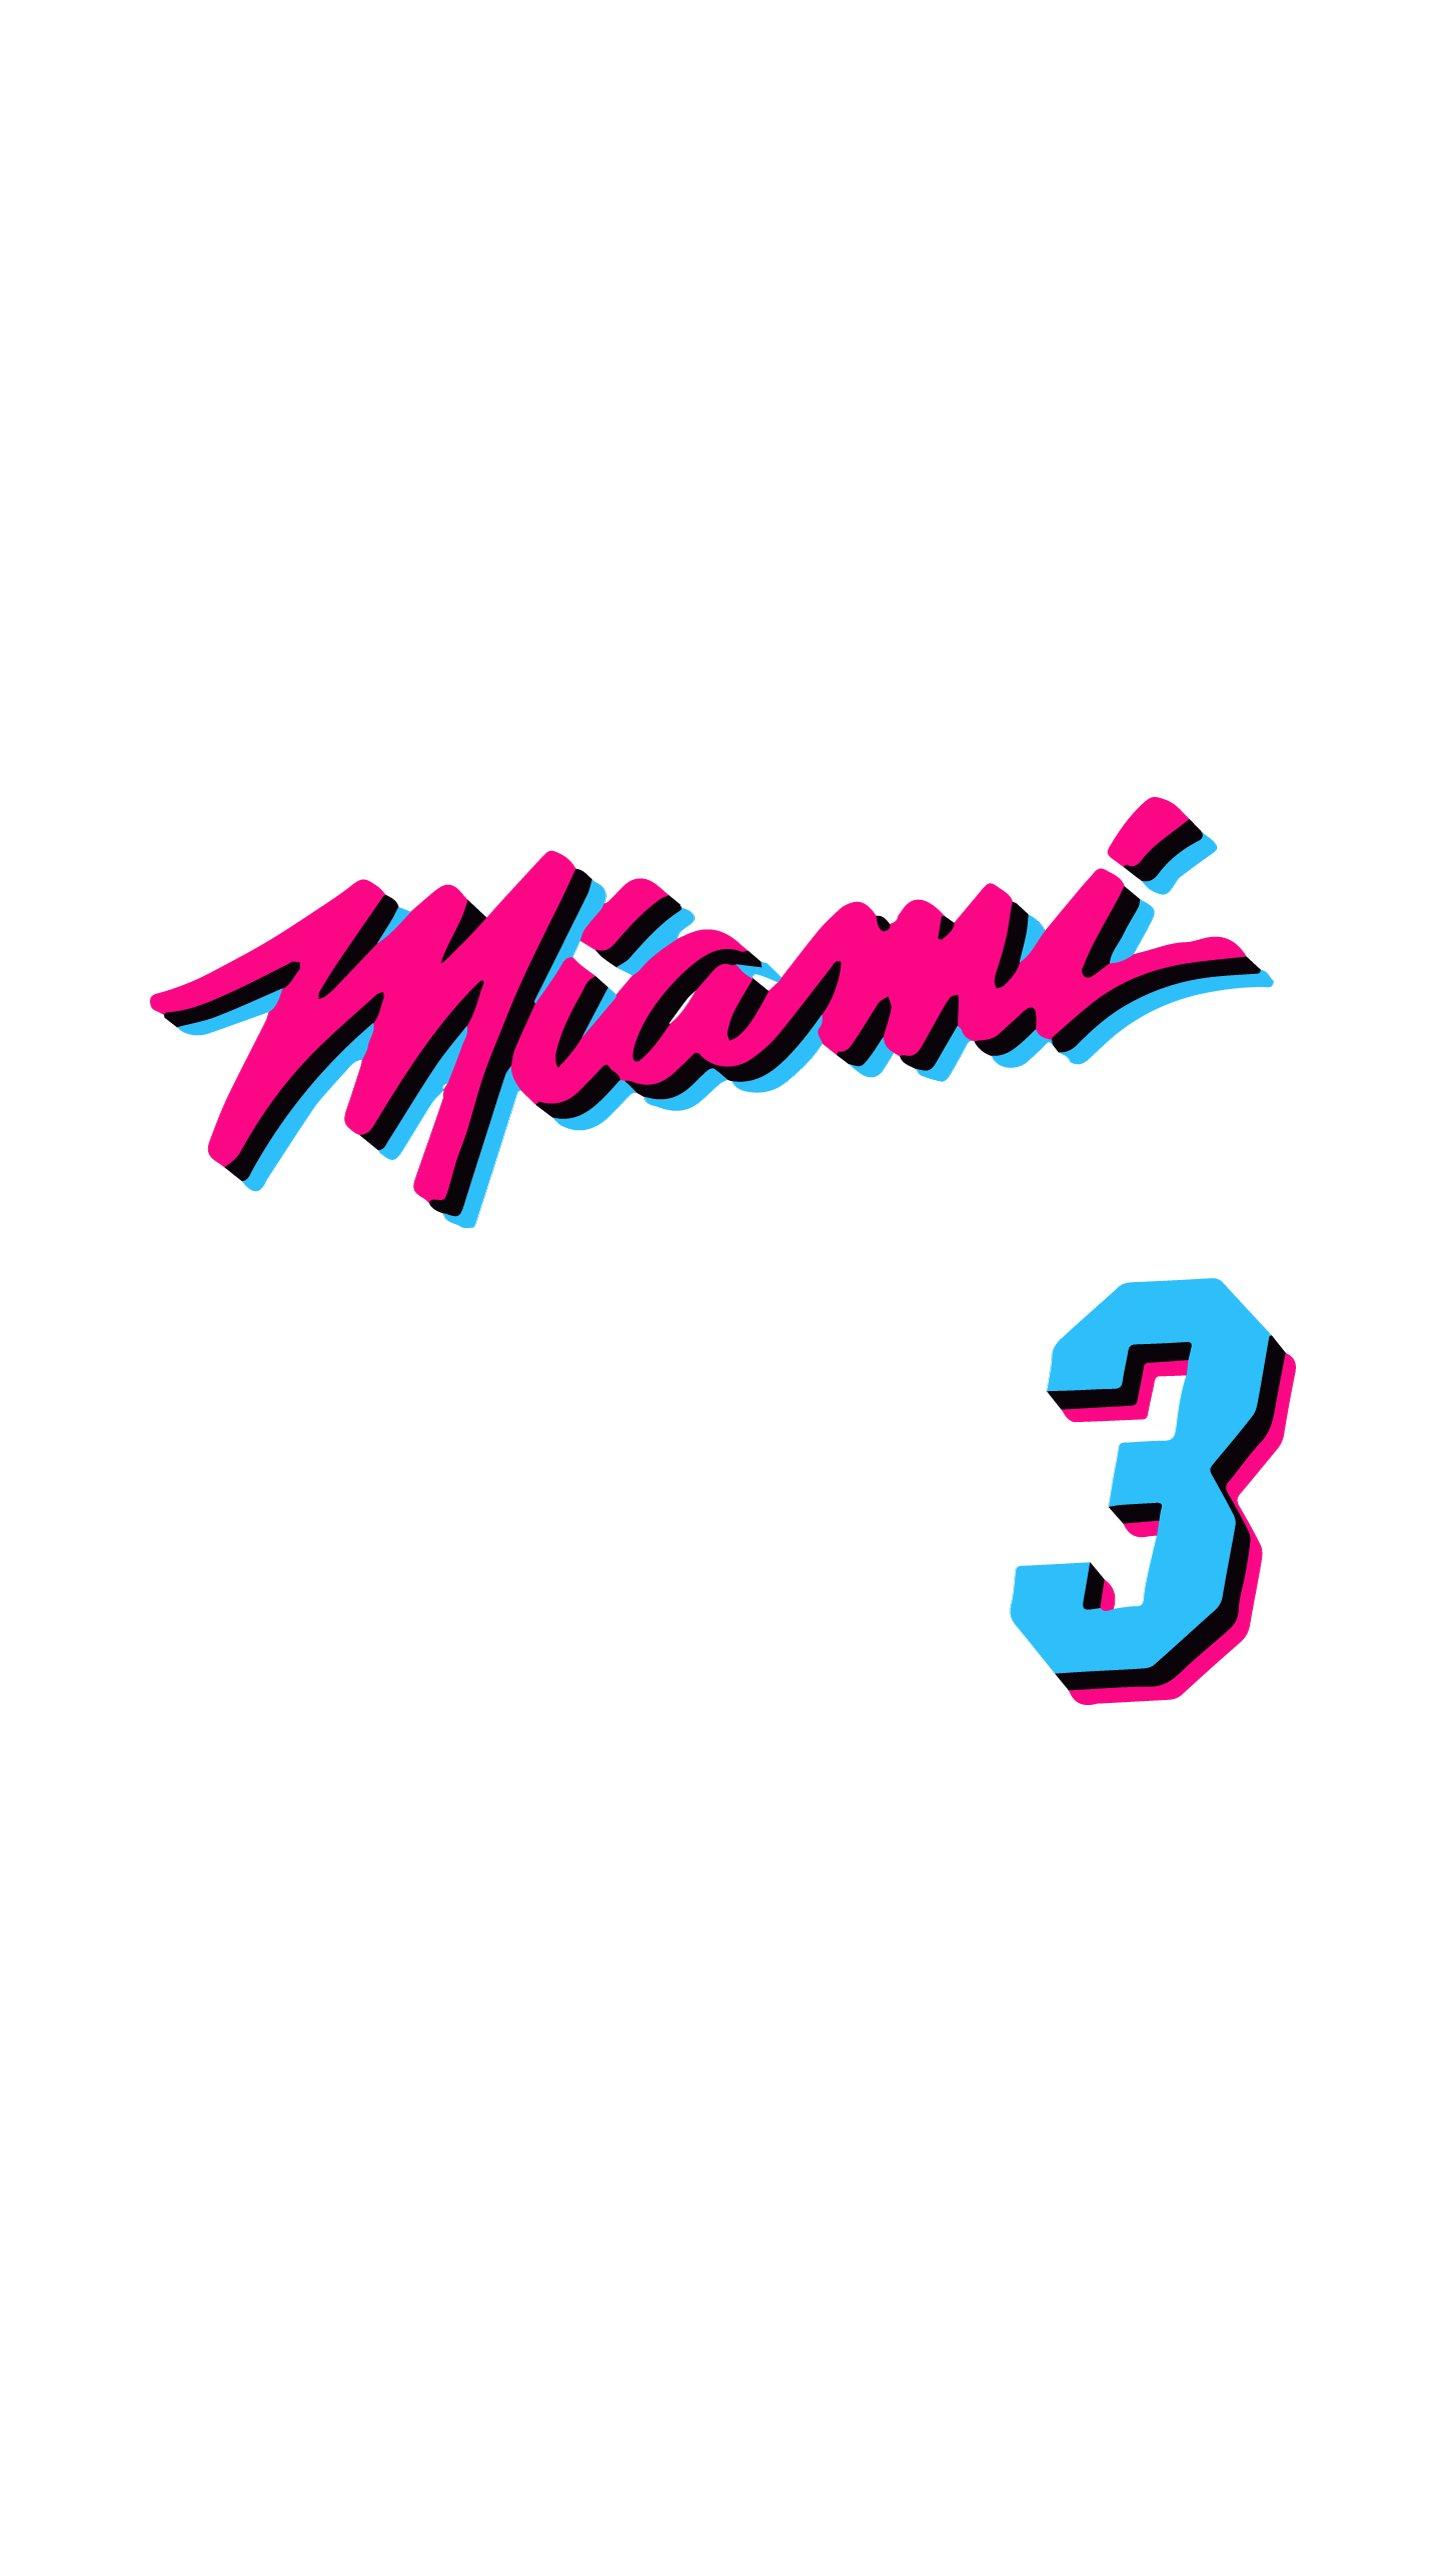 Miami vice jersey font - Bosview